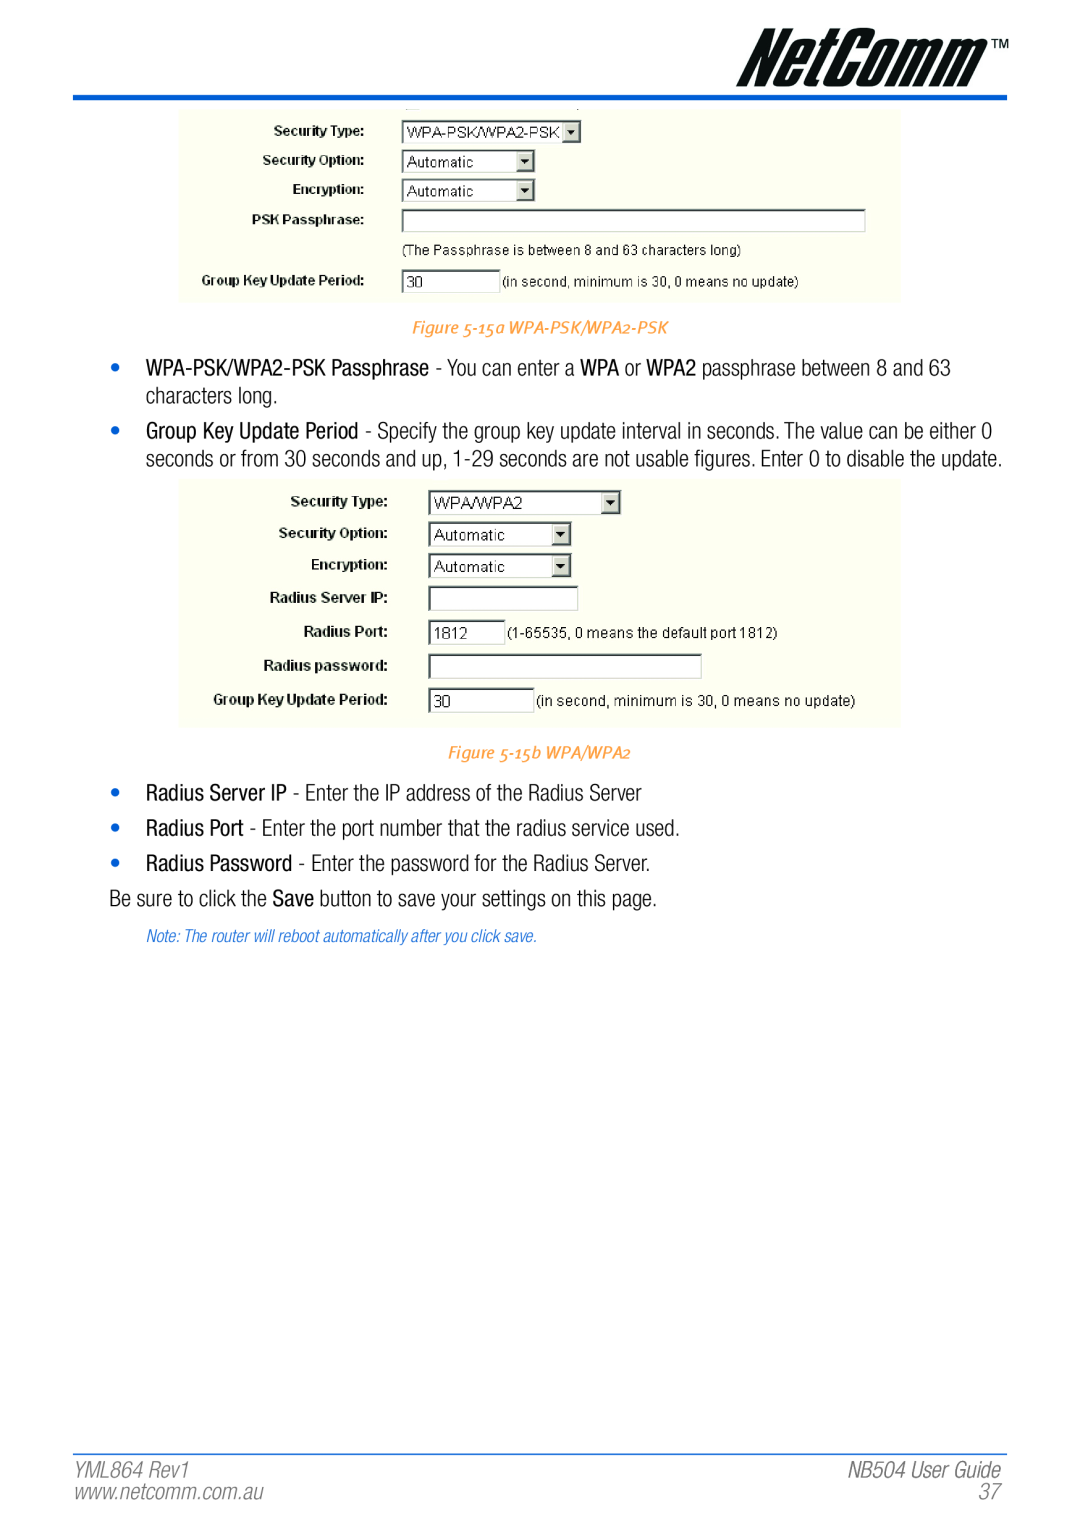 NetComm NB504 manual Radius Server IP - Enter the IP address of the Radius Server, YML864 Rev1 